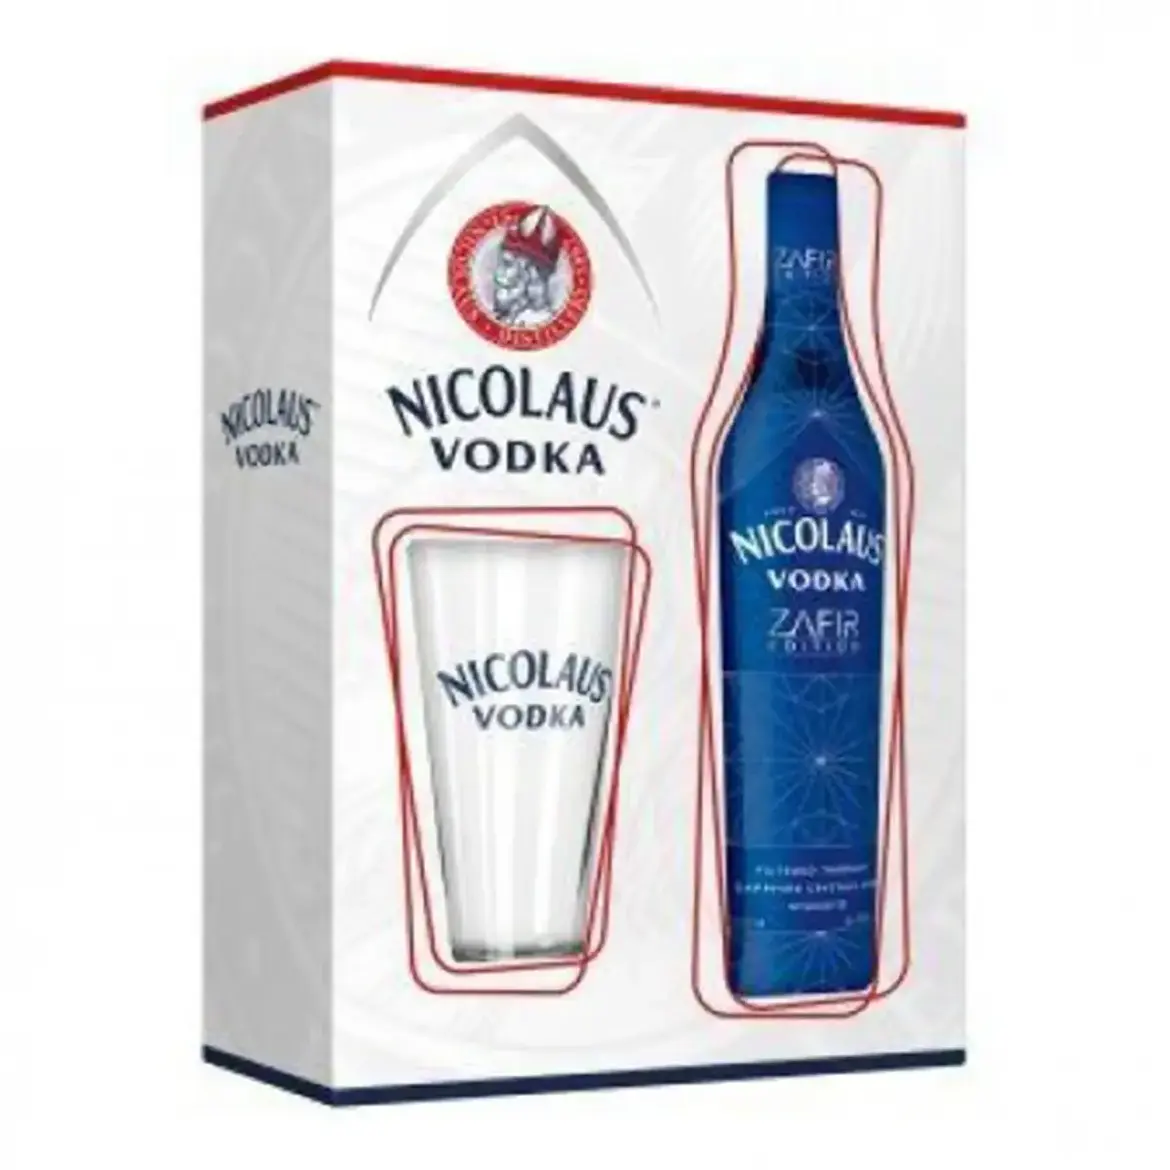 Nicolaus vodka 38% + pohár